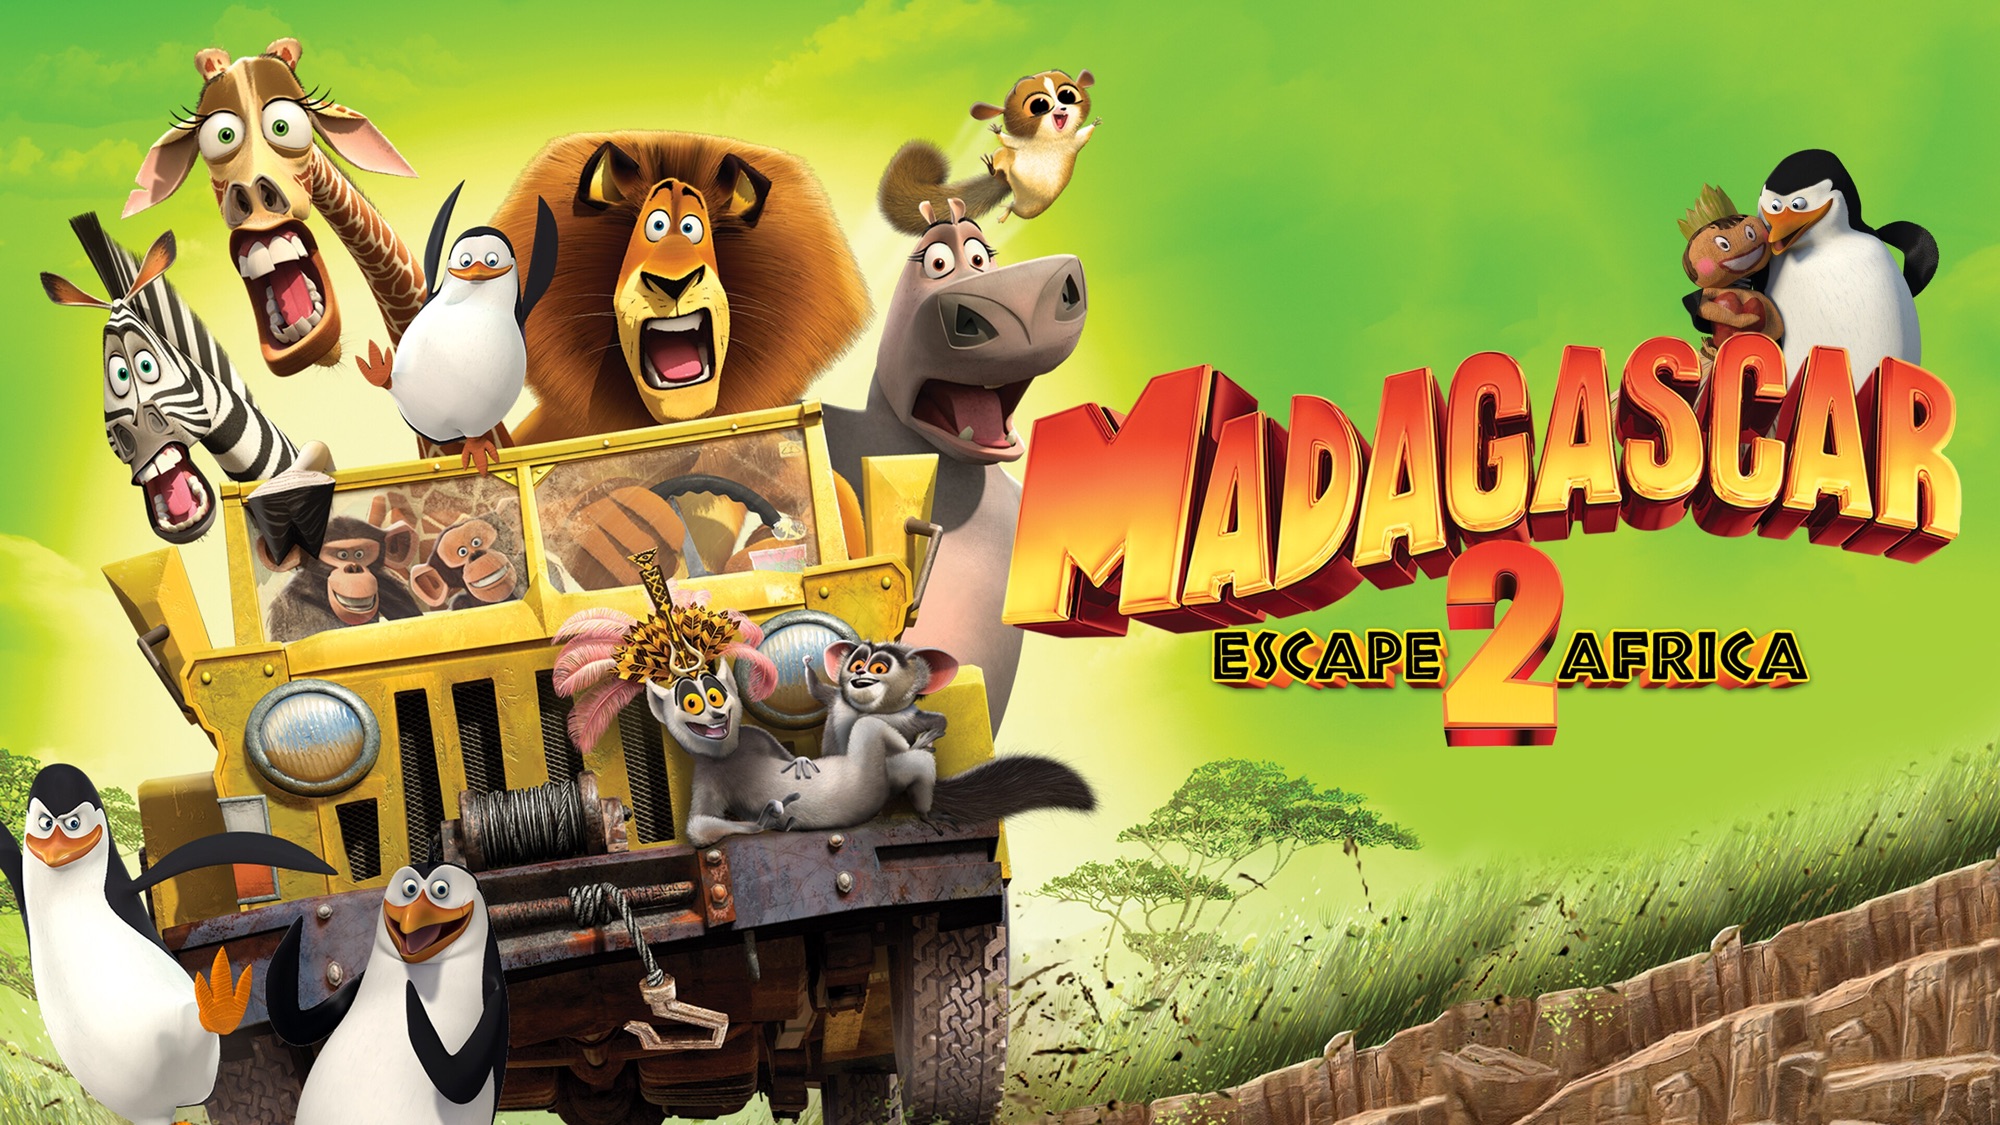 madagascar escape 2 africa full movie free download